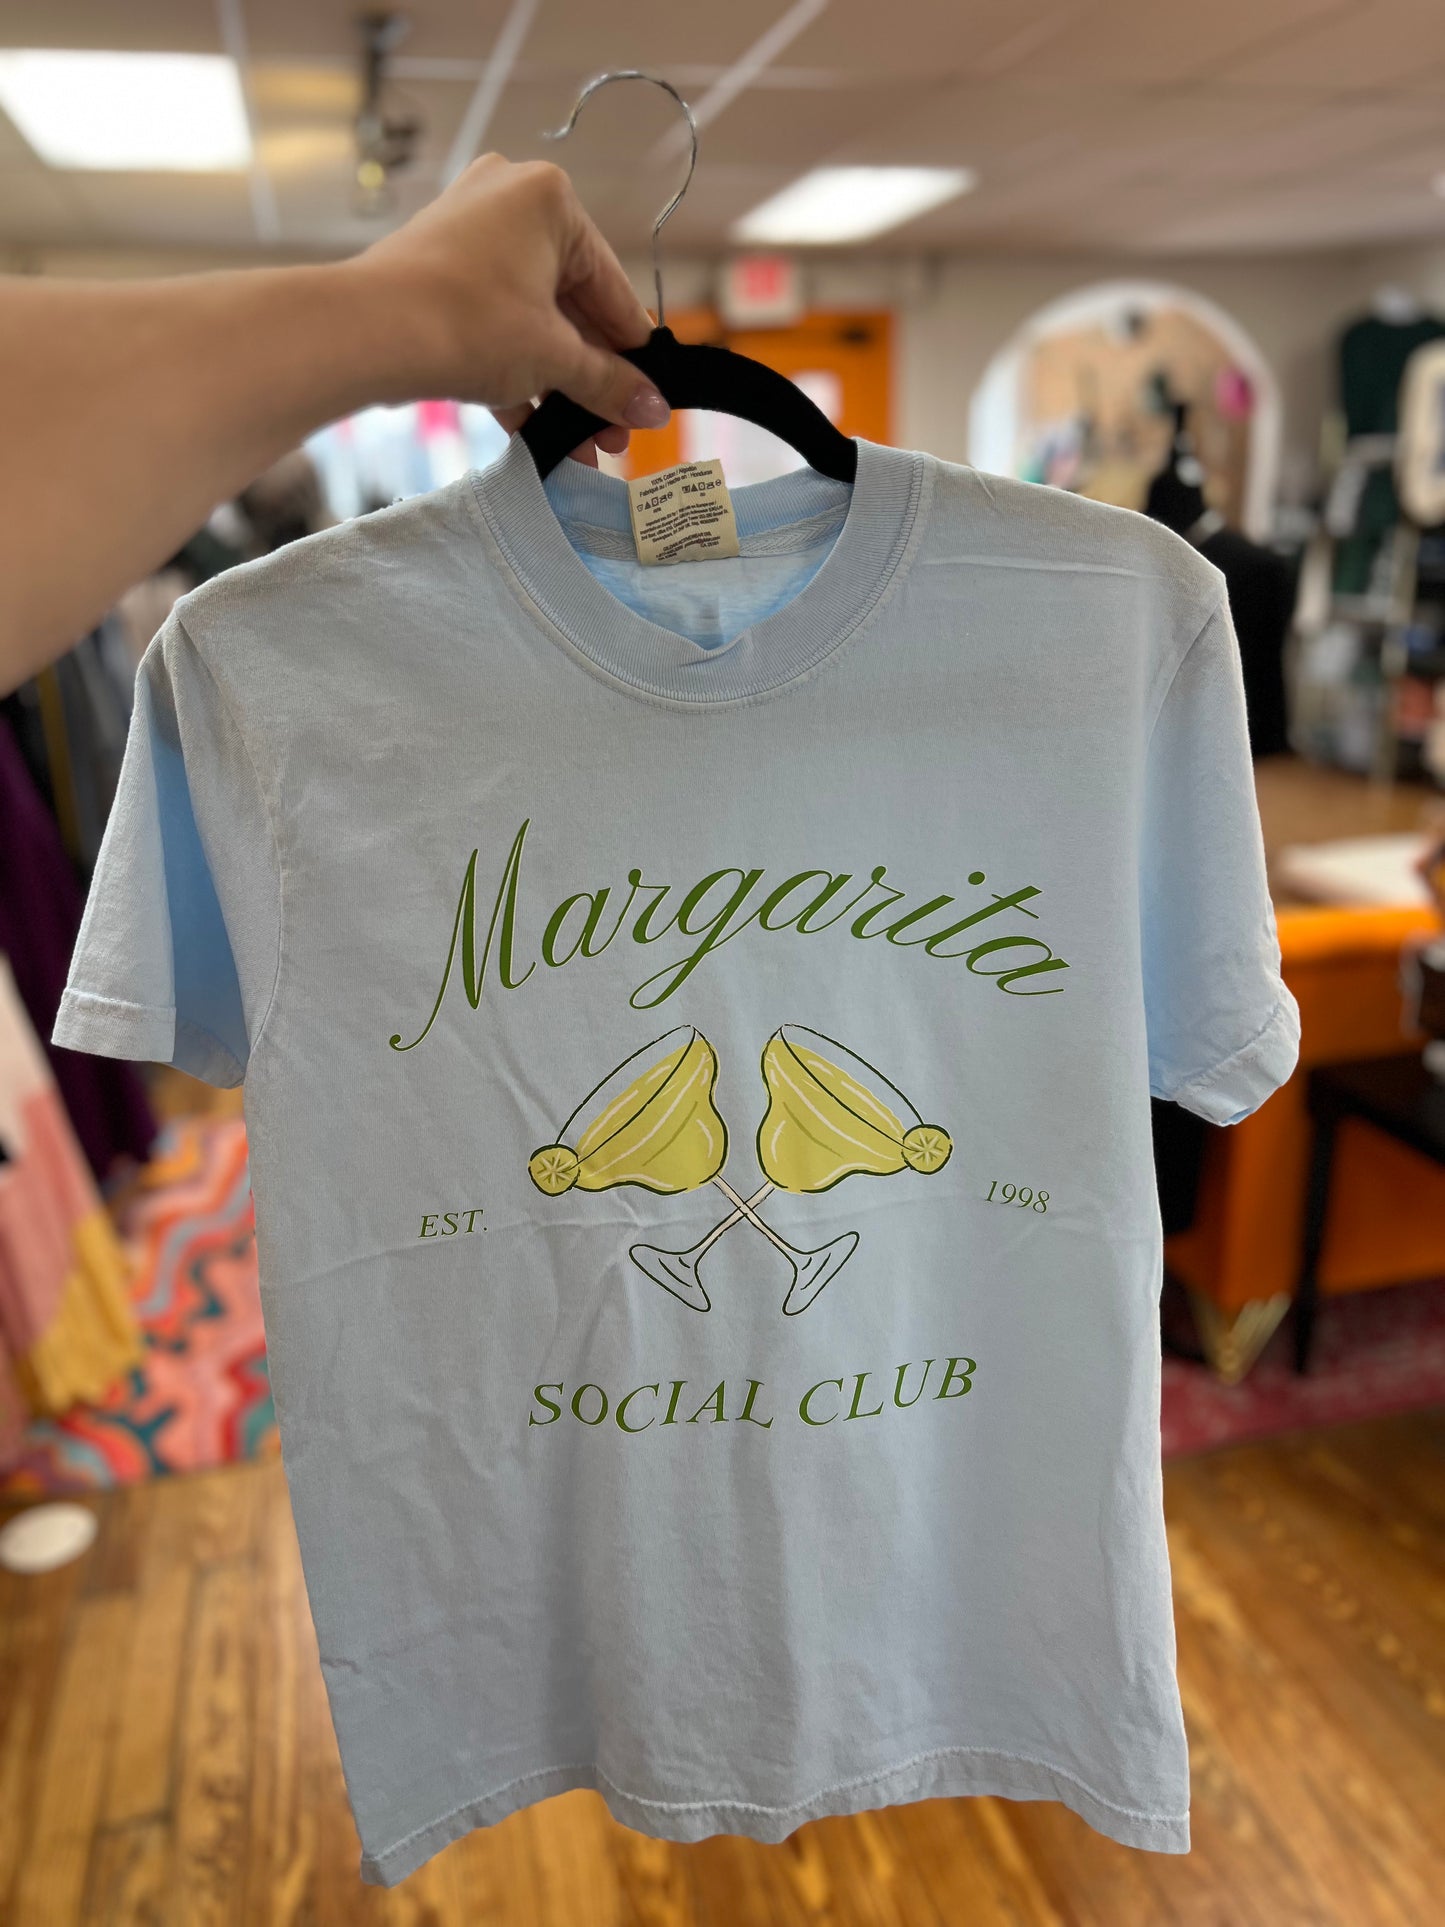 Margarita Club Tee